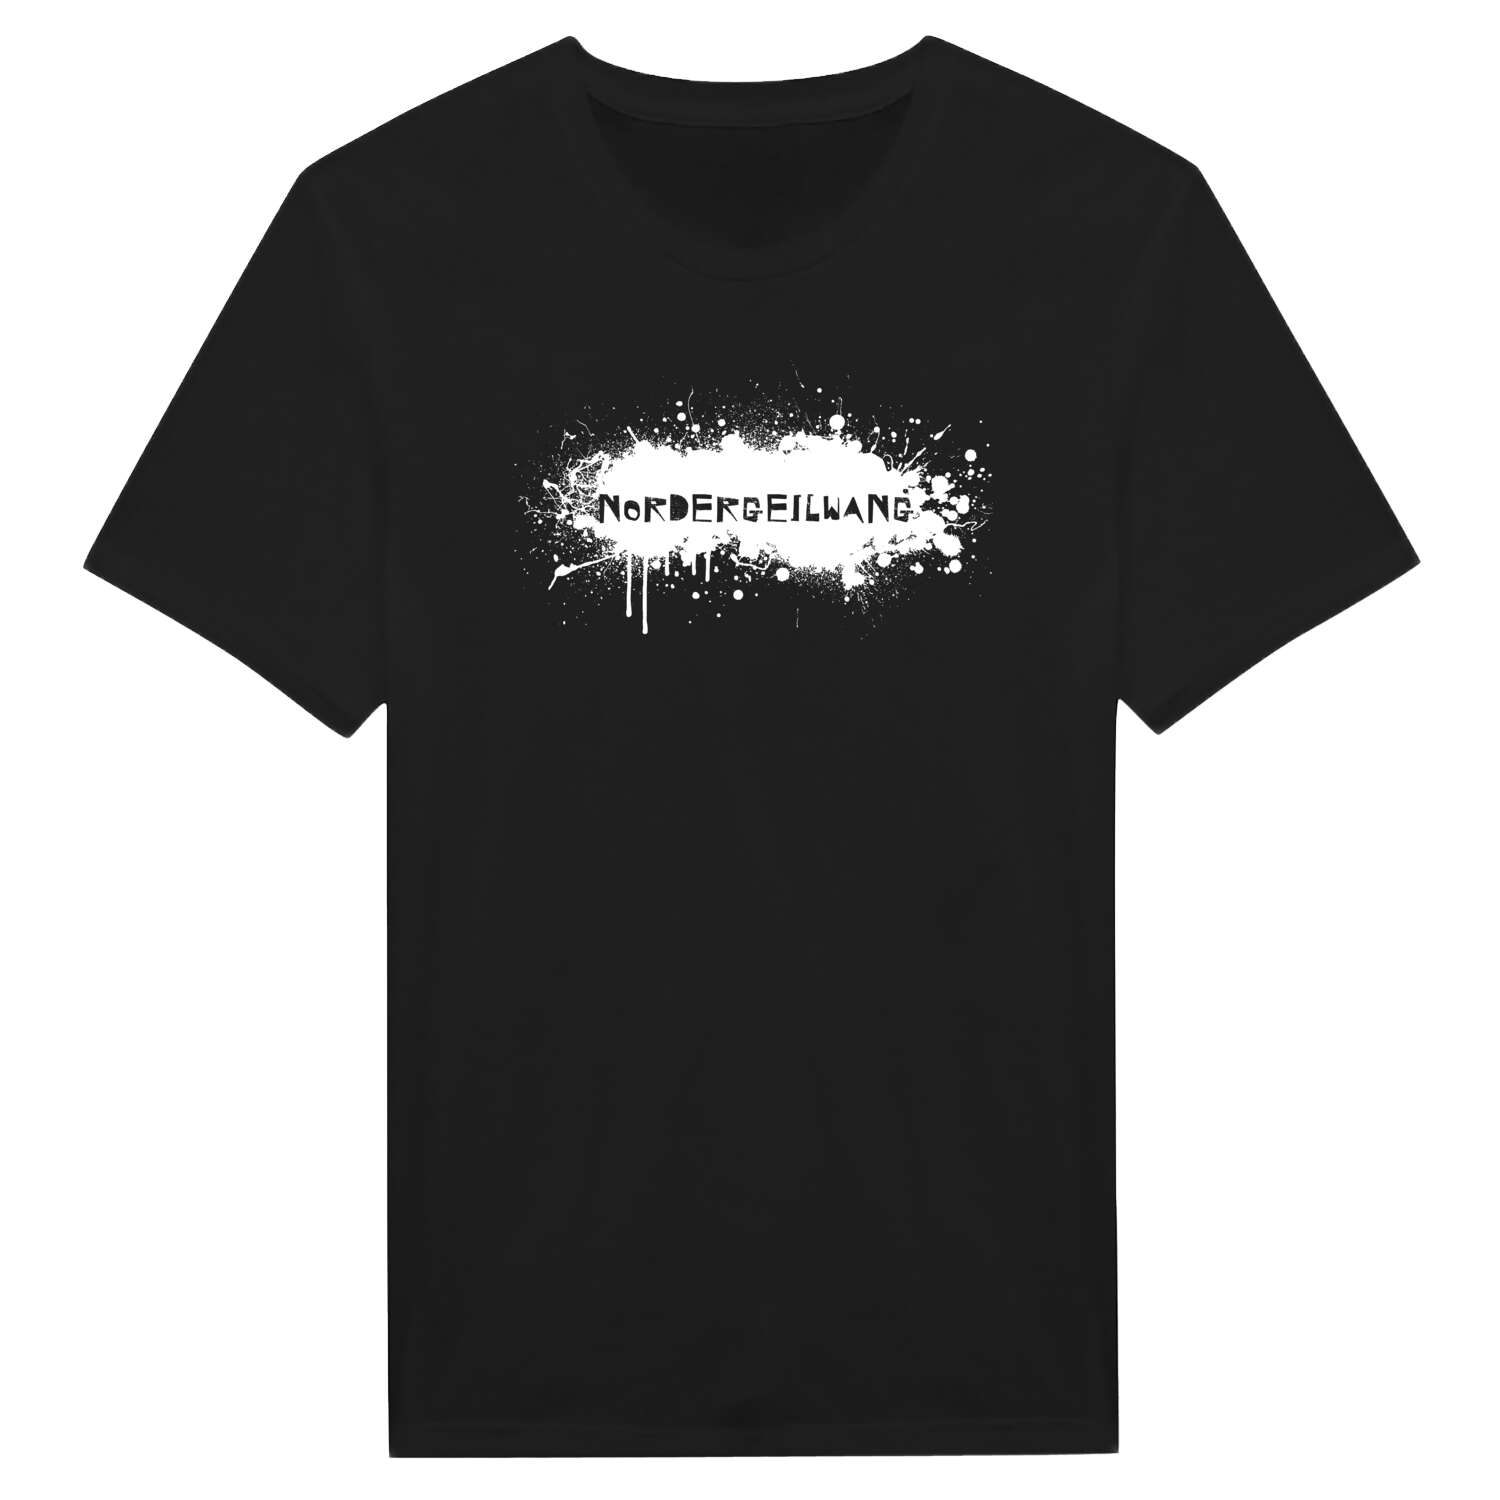 Nordergeilwang T-Shirt »Paint Splash Punk«